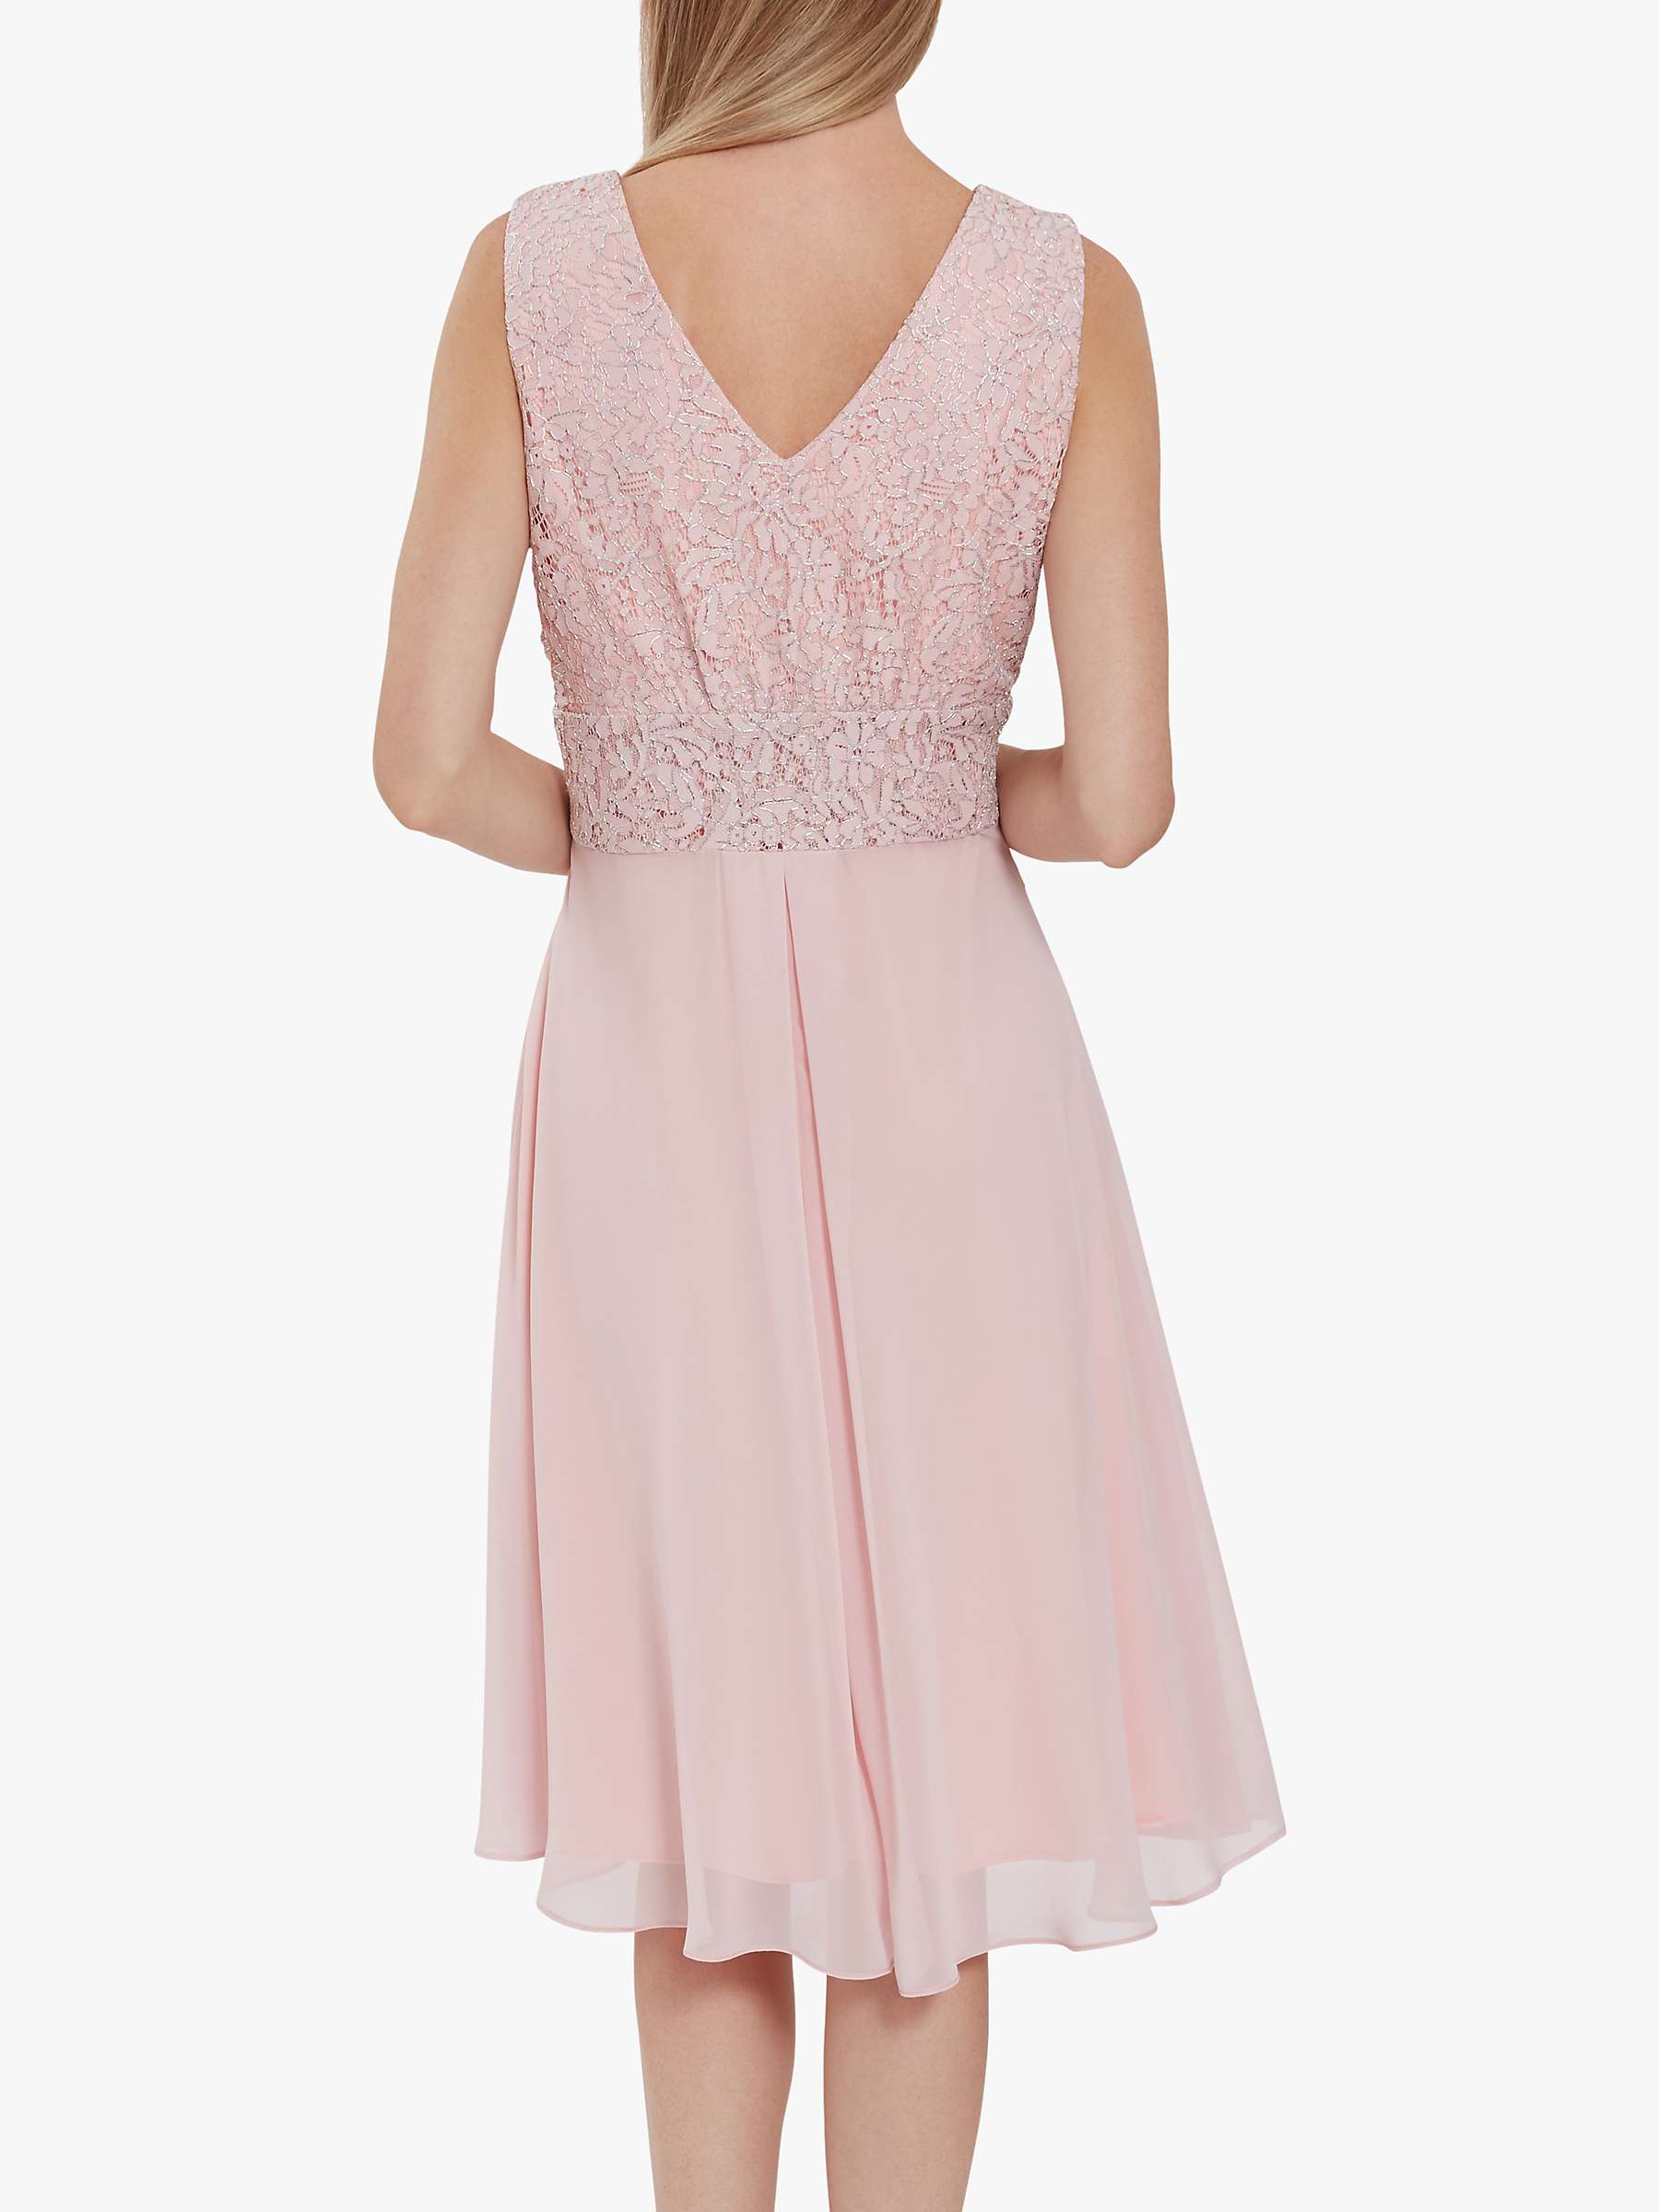 Buy Gina Bacconi Gracie Metallic Floral Lace Sleeveless Dress Online at johnlewis.com